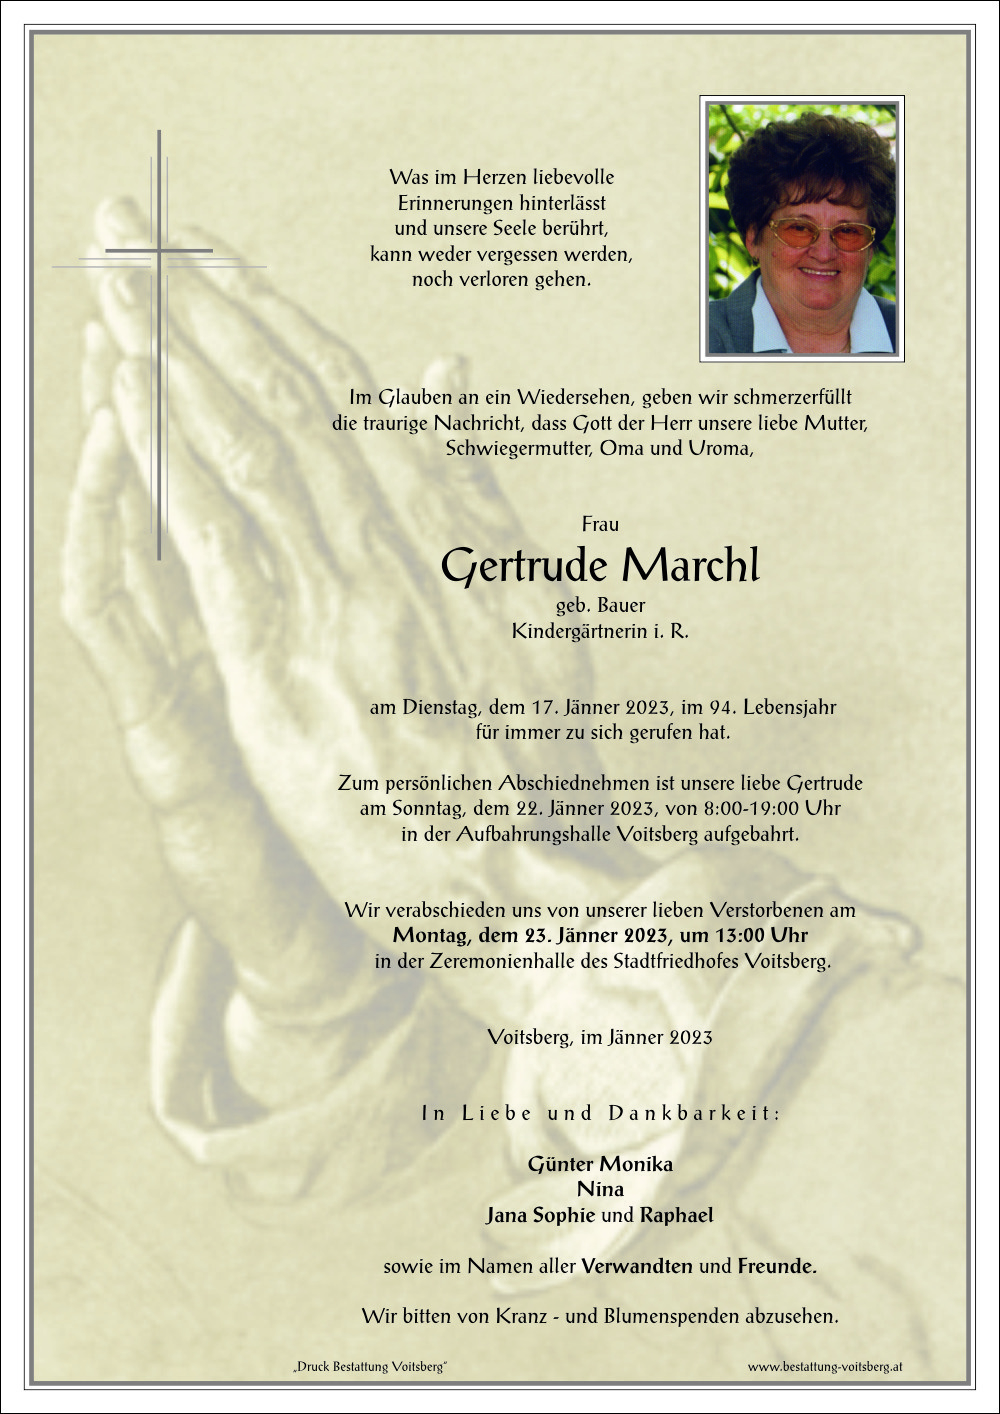 Gertrude Marchl